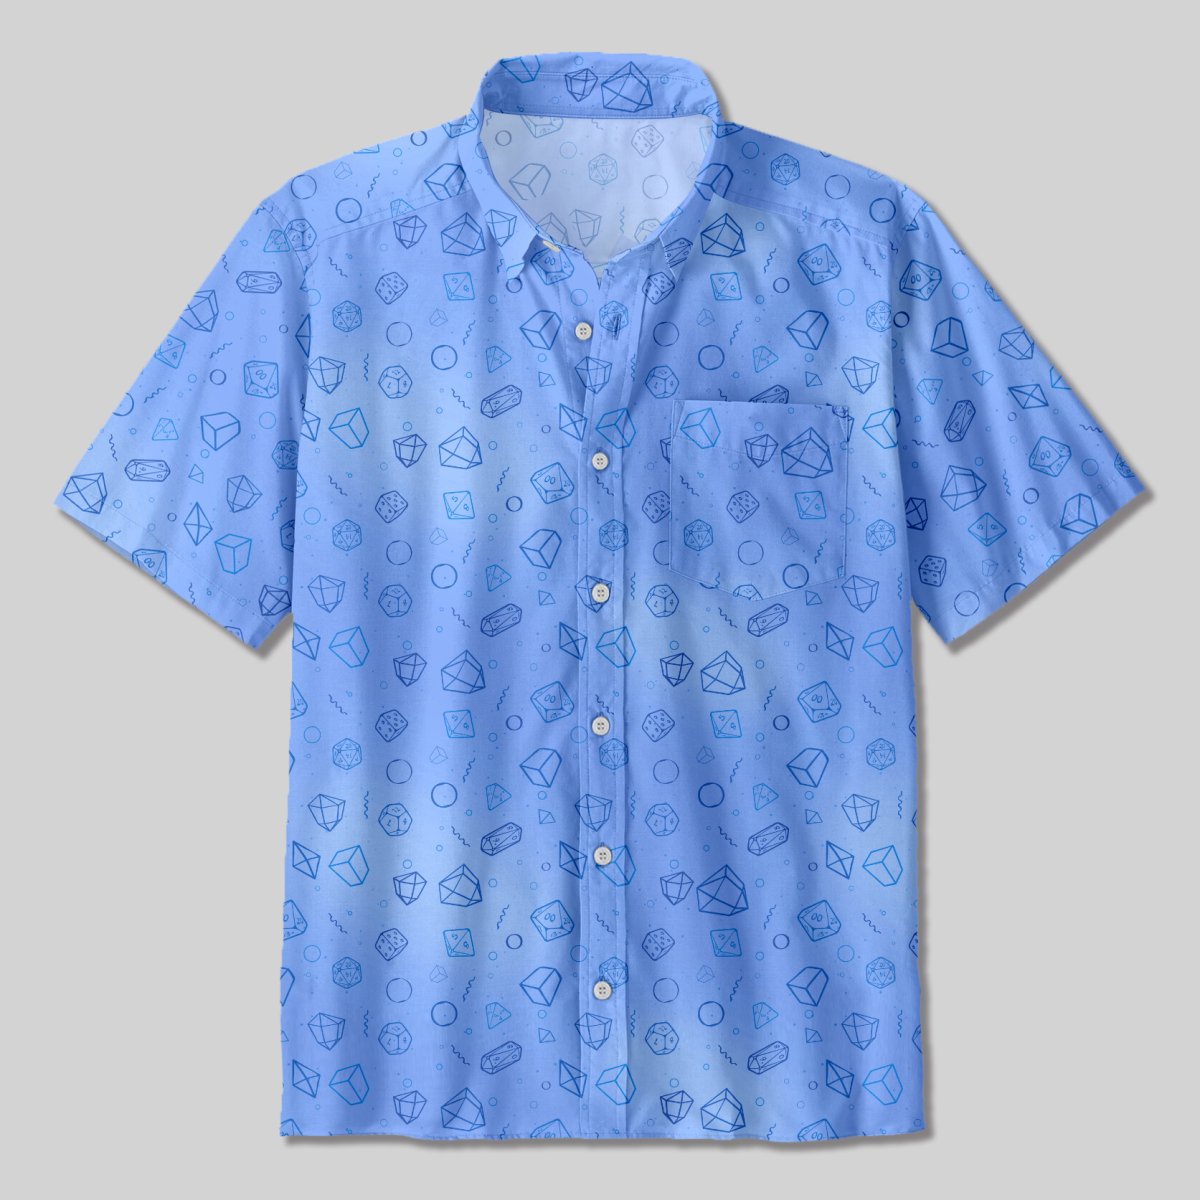 DND Polyhedra in Seawater Button Up Pocket Shirt - Geeksoutfit